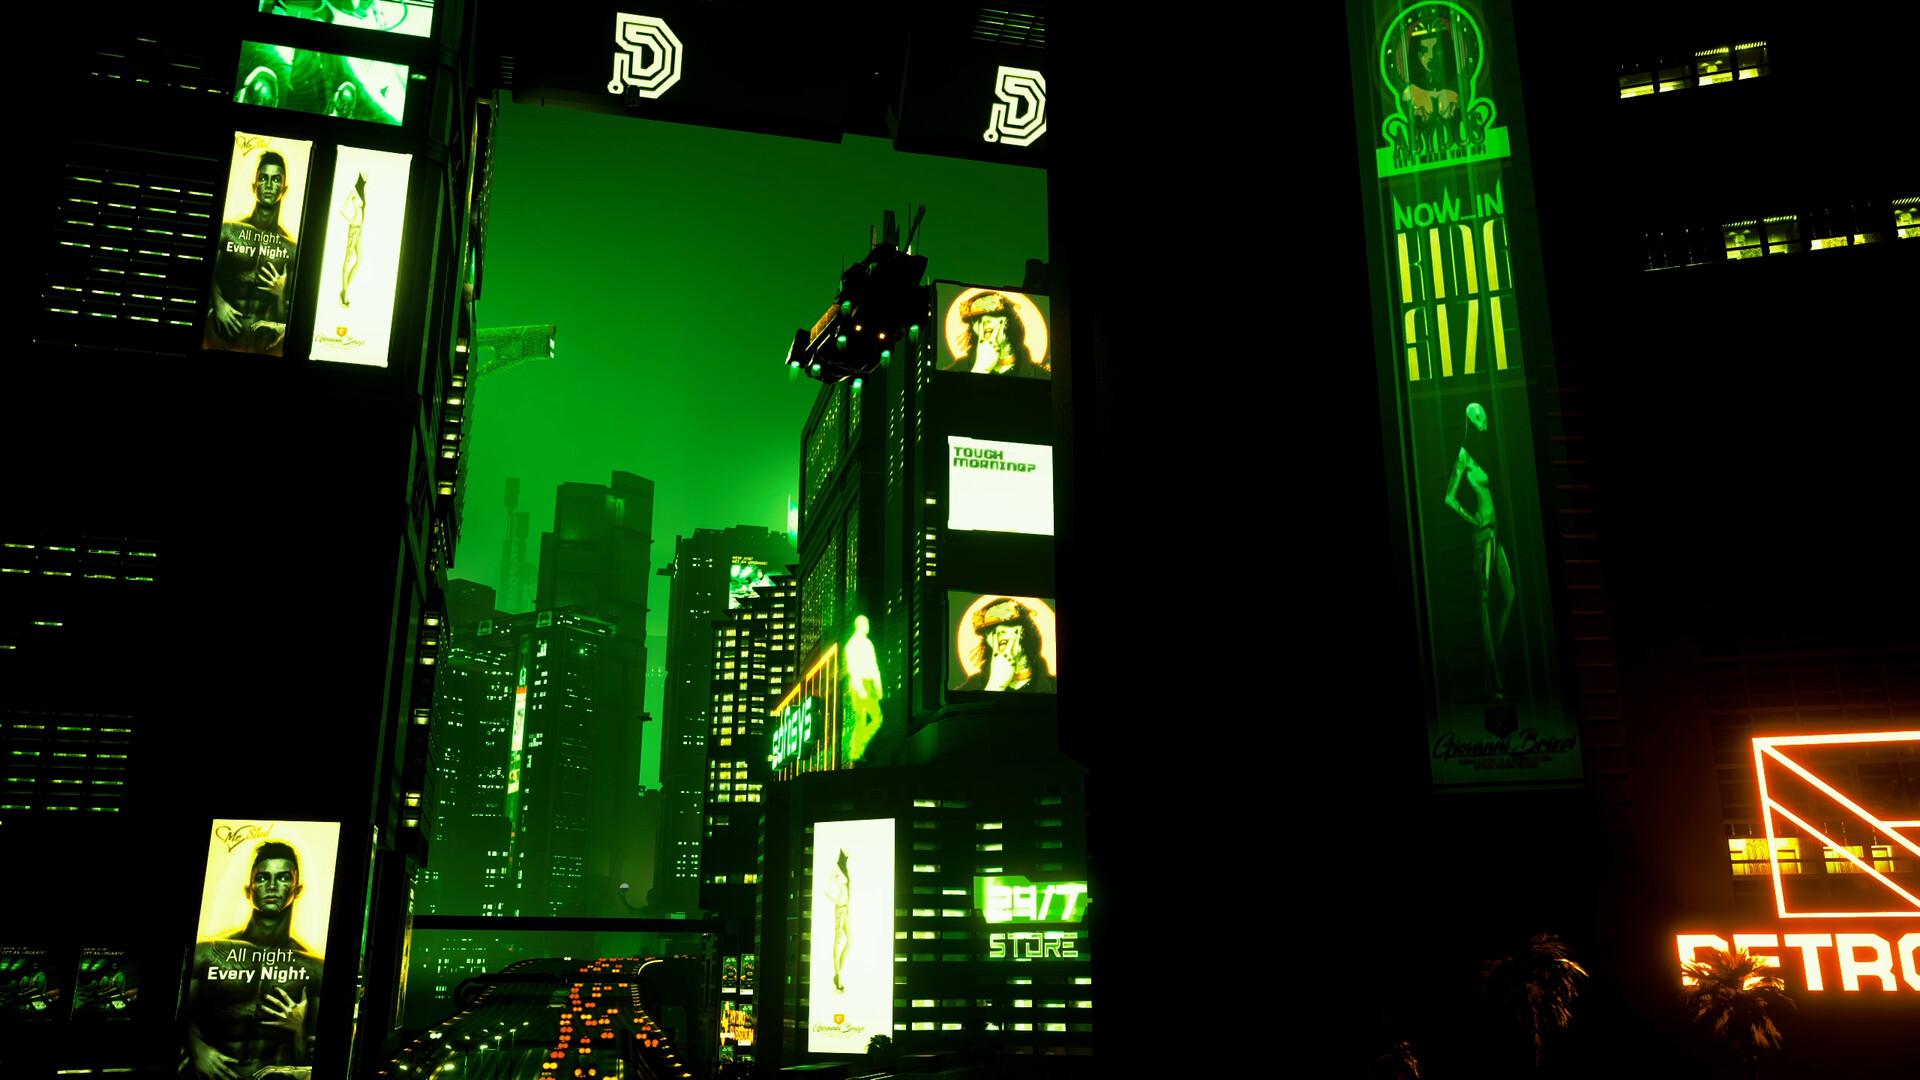 Cyberpunk, Cyberpunk City HD wallpaper